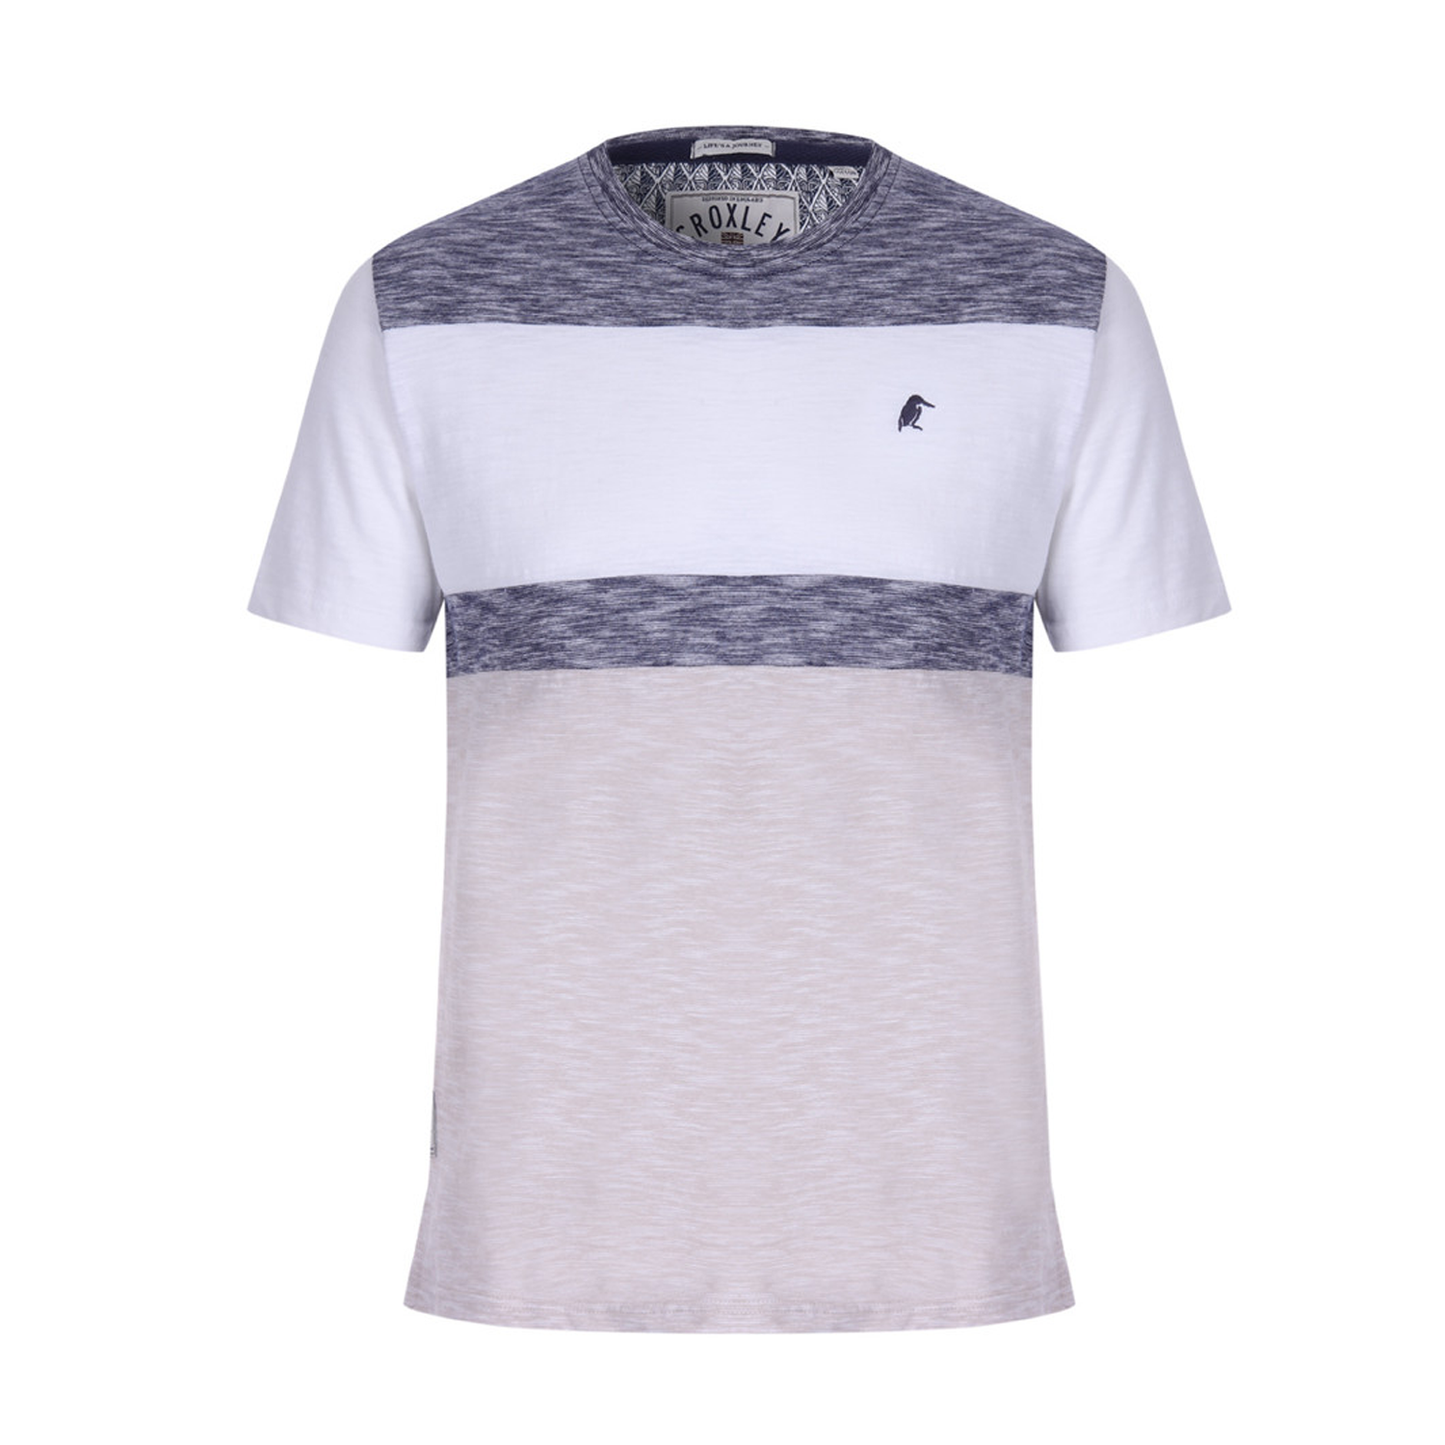 Croxley - Charlton T-Shirt